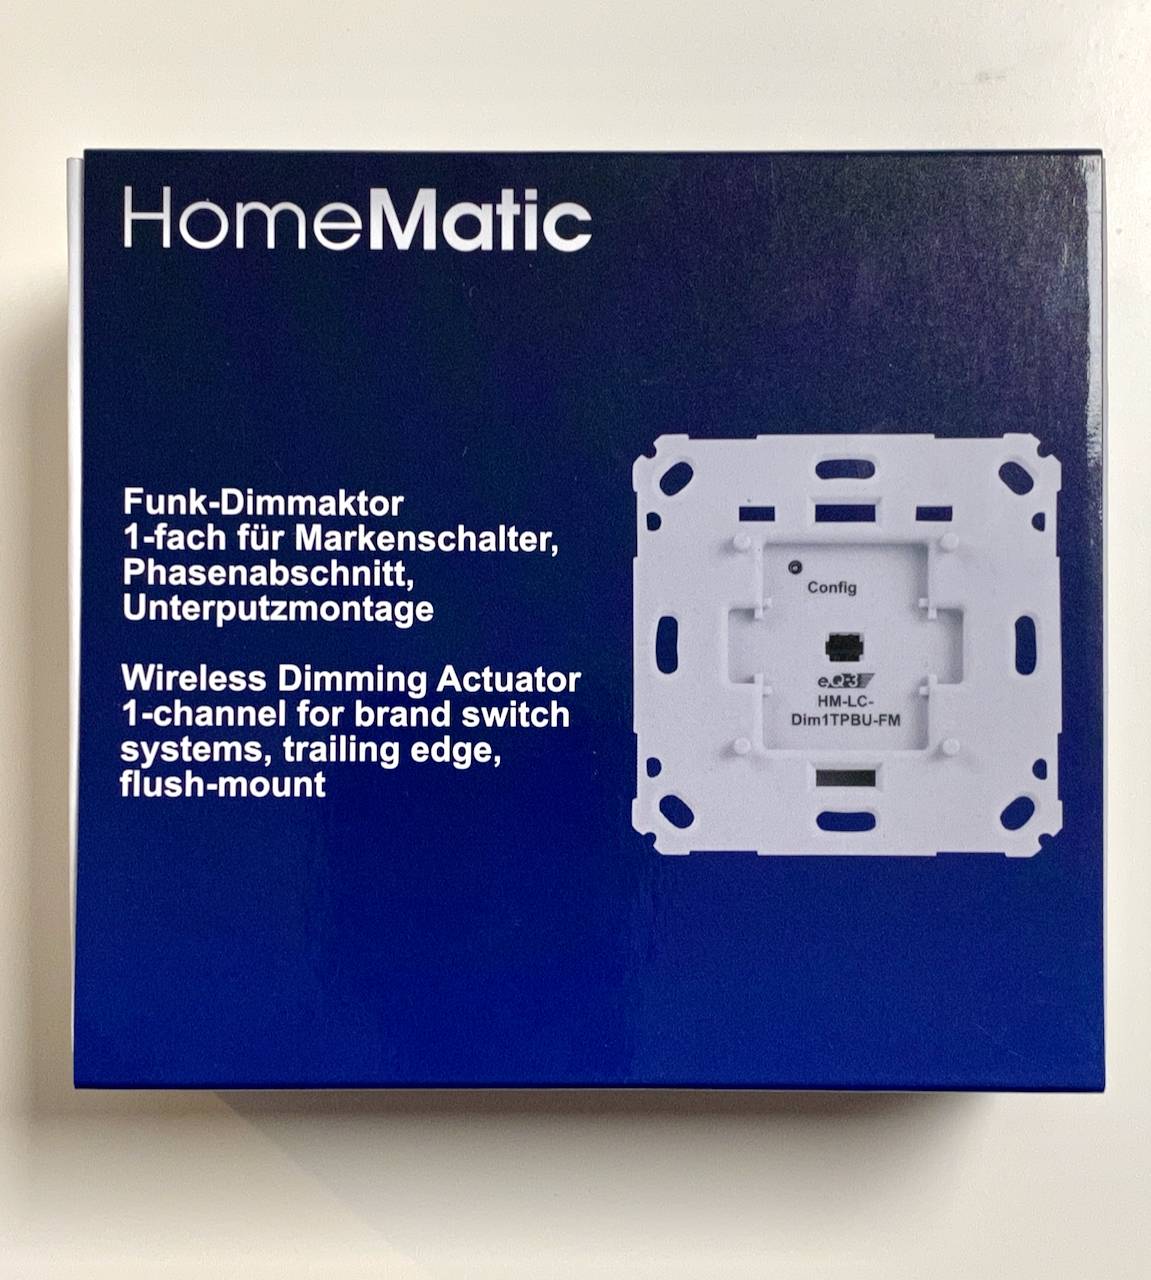 Umverpackung des Homematic Funk Dimmaktors für Markenschalter.